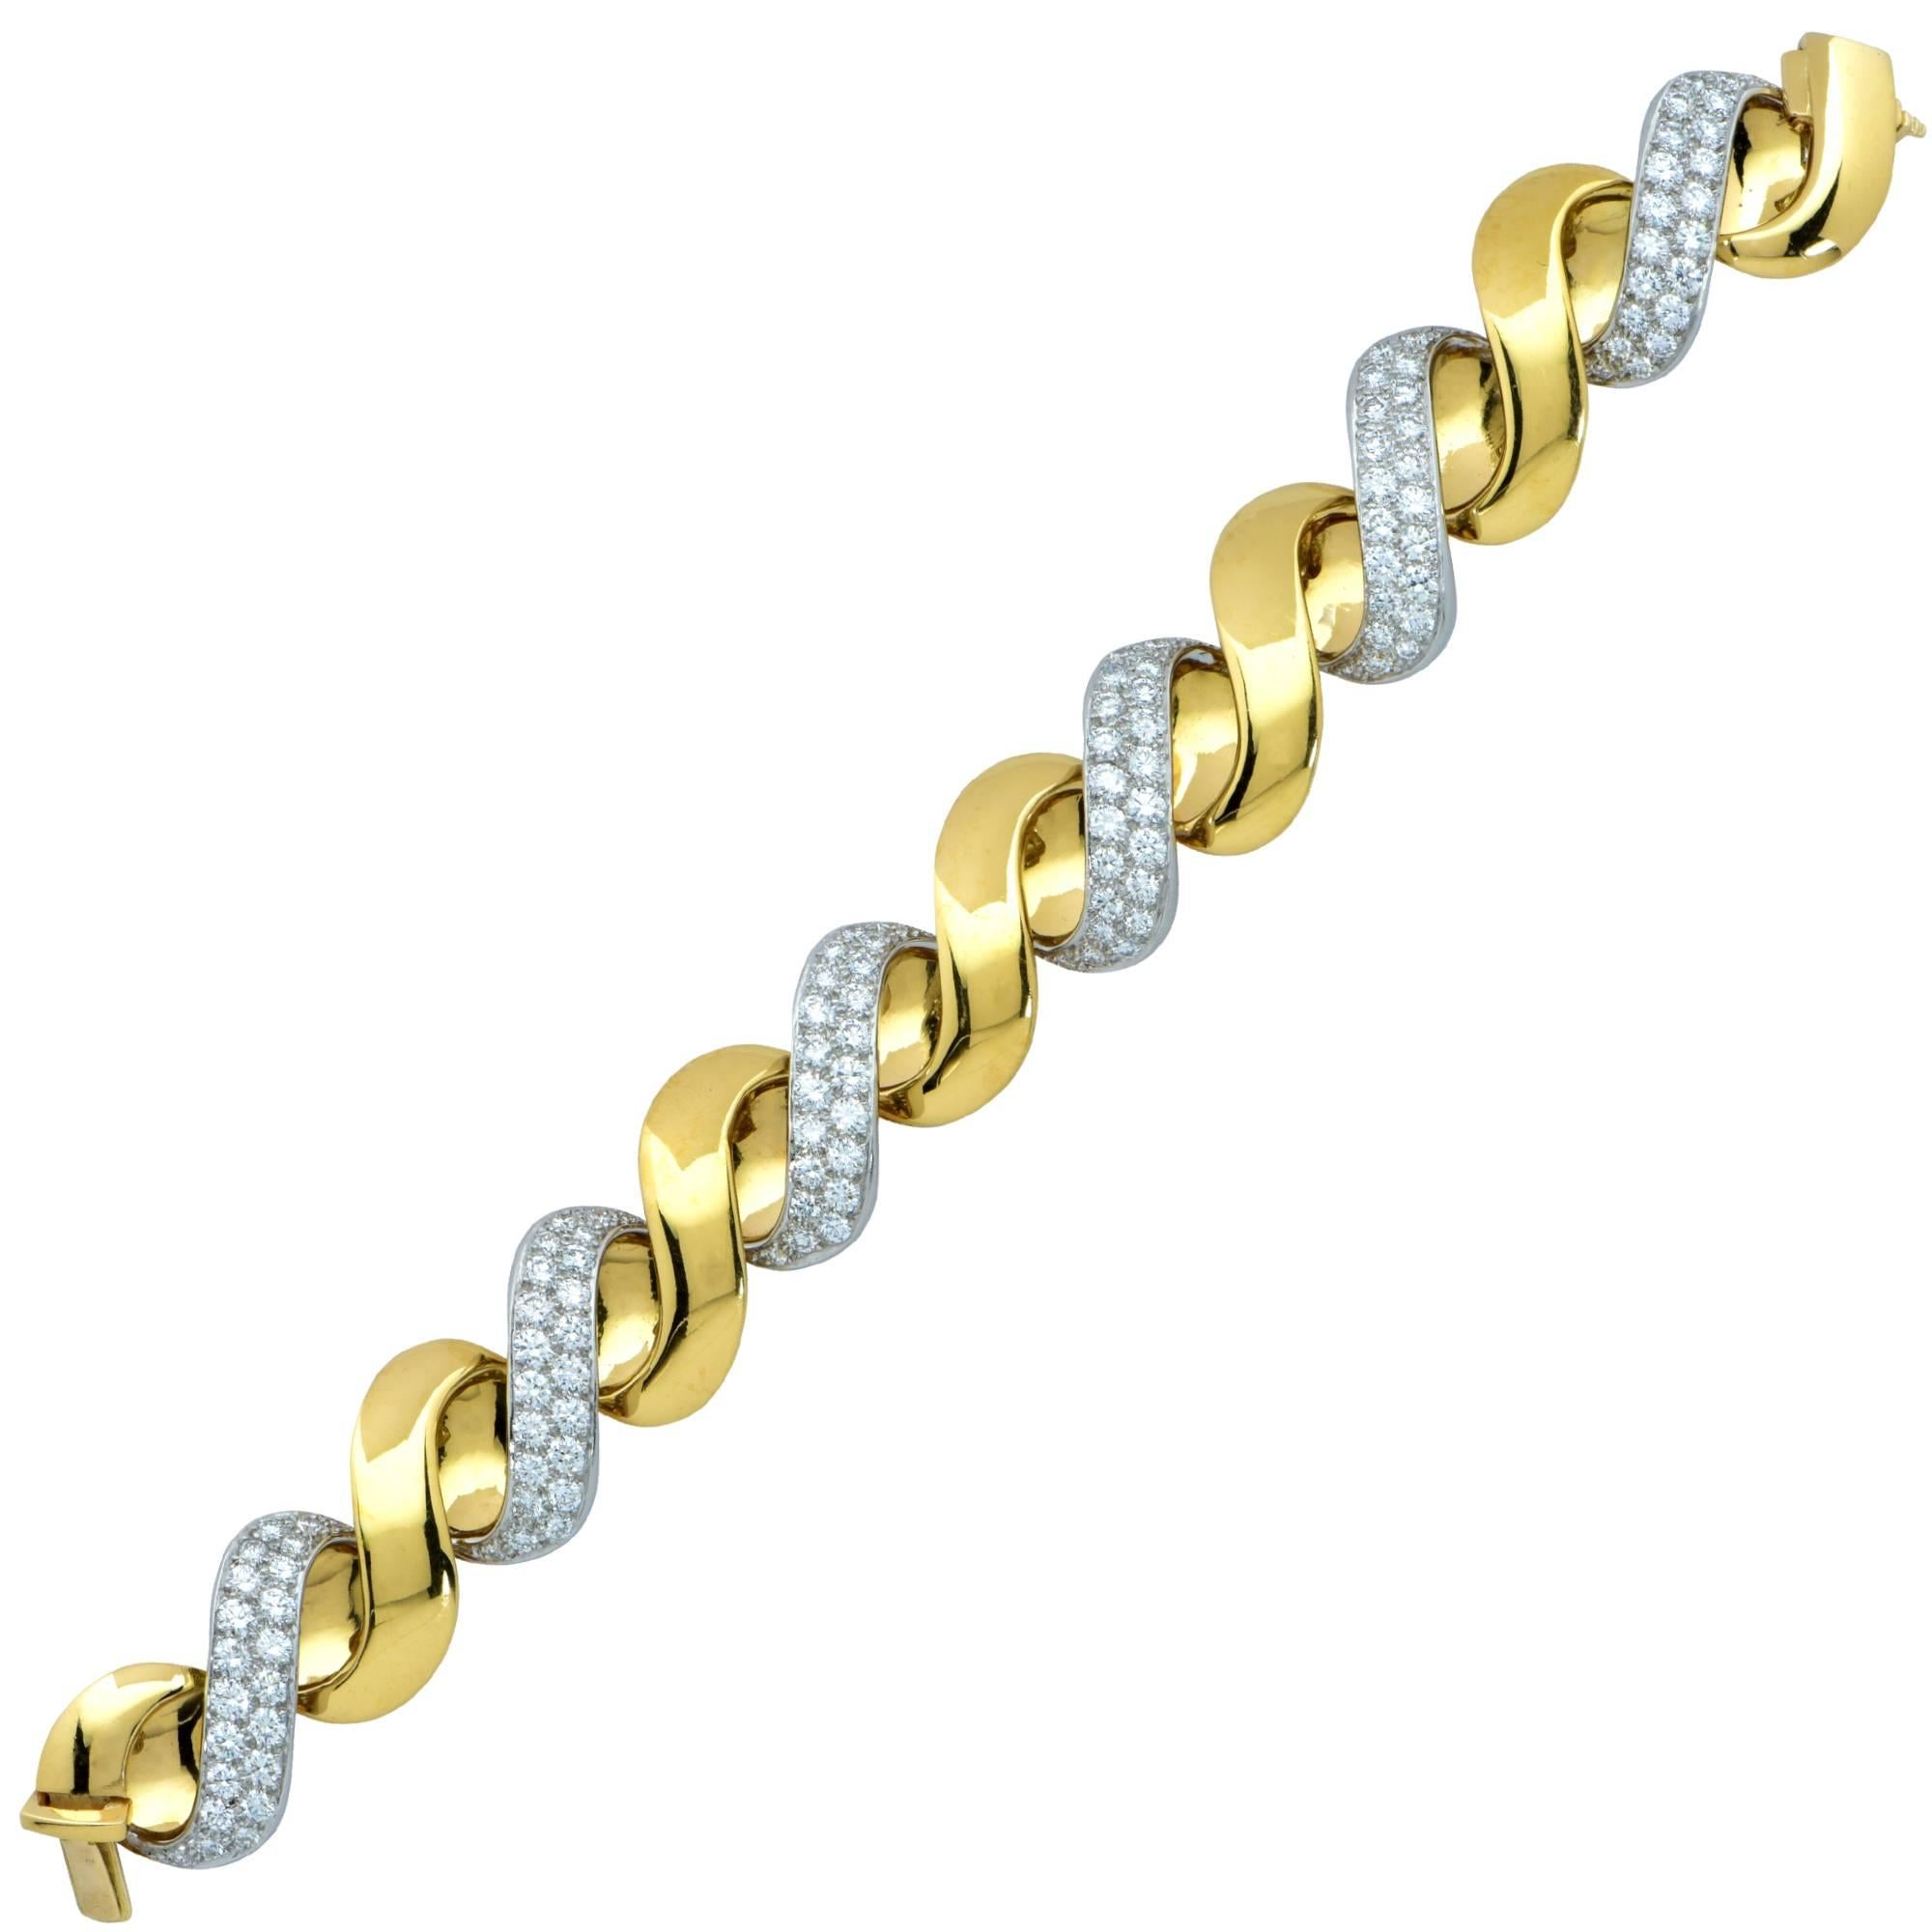 Oscar Heyman 18 Karat Yellow Gold and Diamond Bracelet